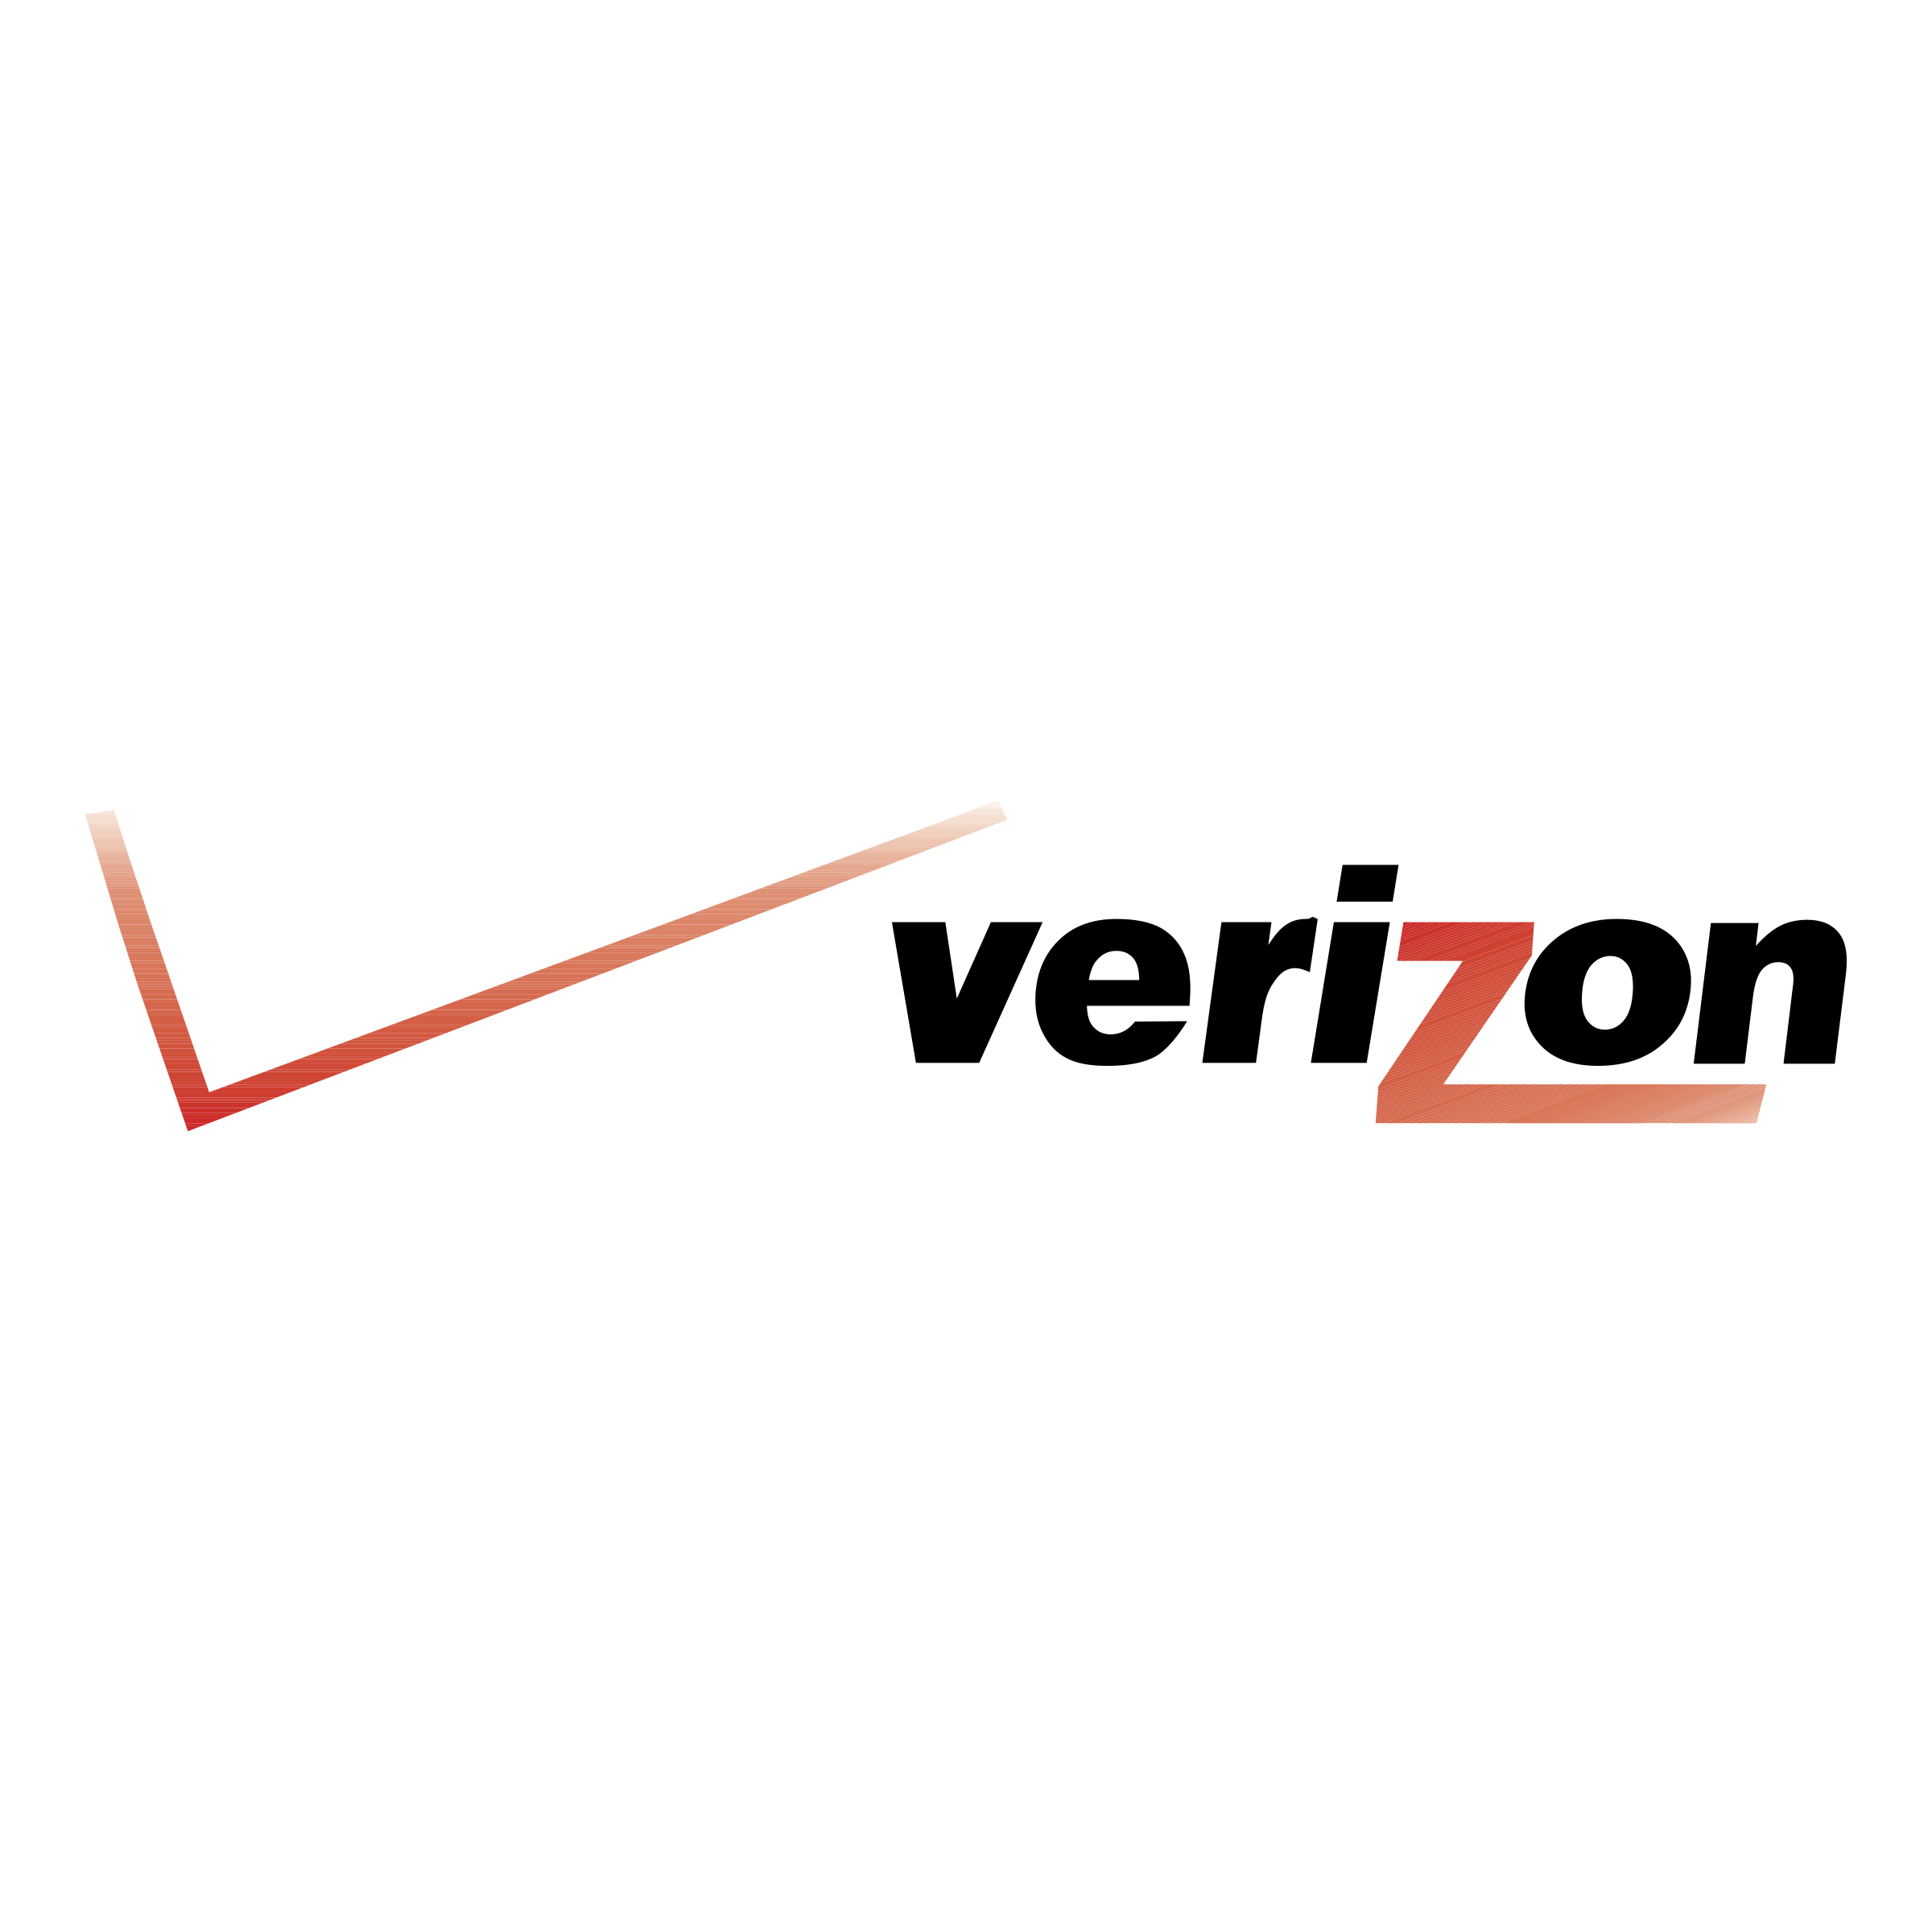 Verixon Logo - Verizon Logo PNG Transparent & SVG Vector - Freebie Supply